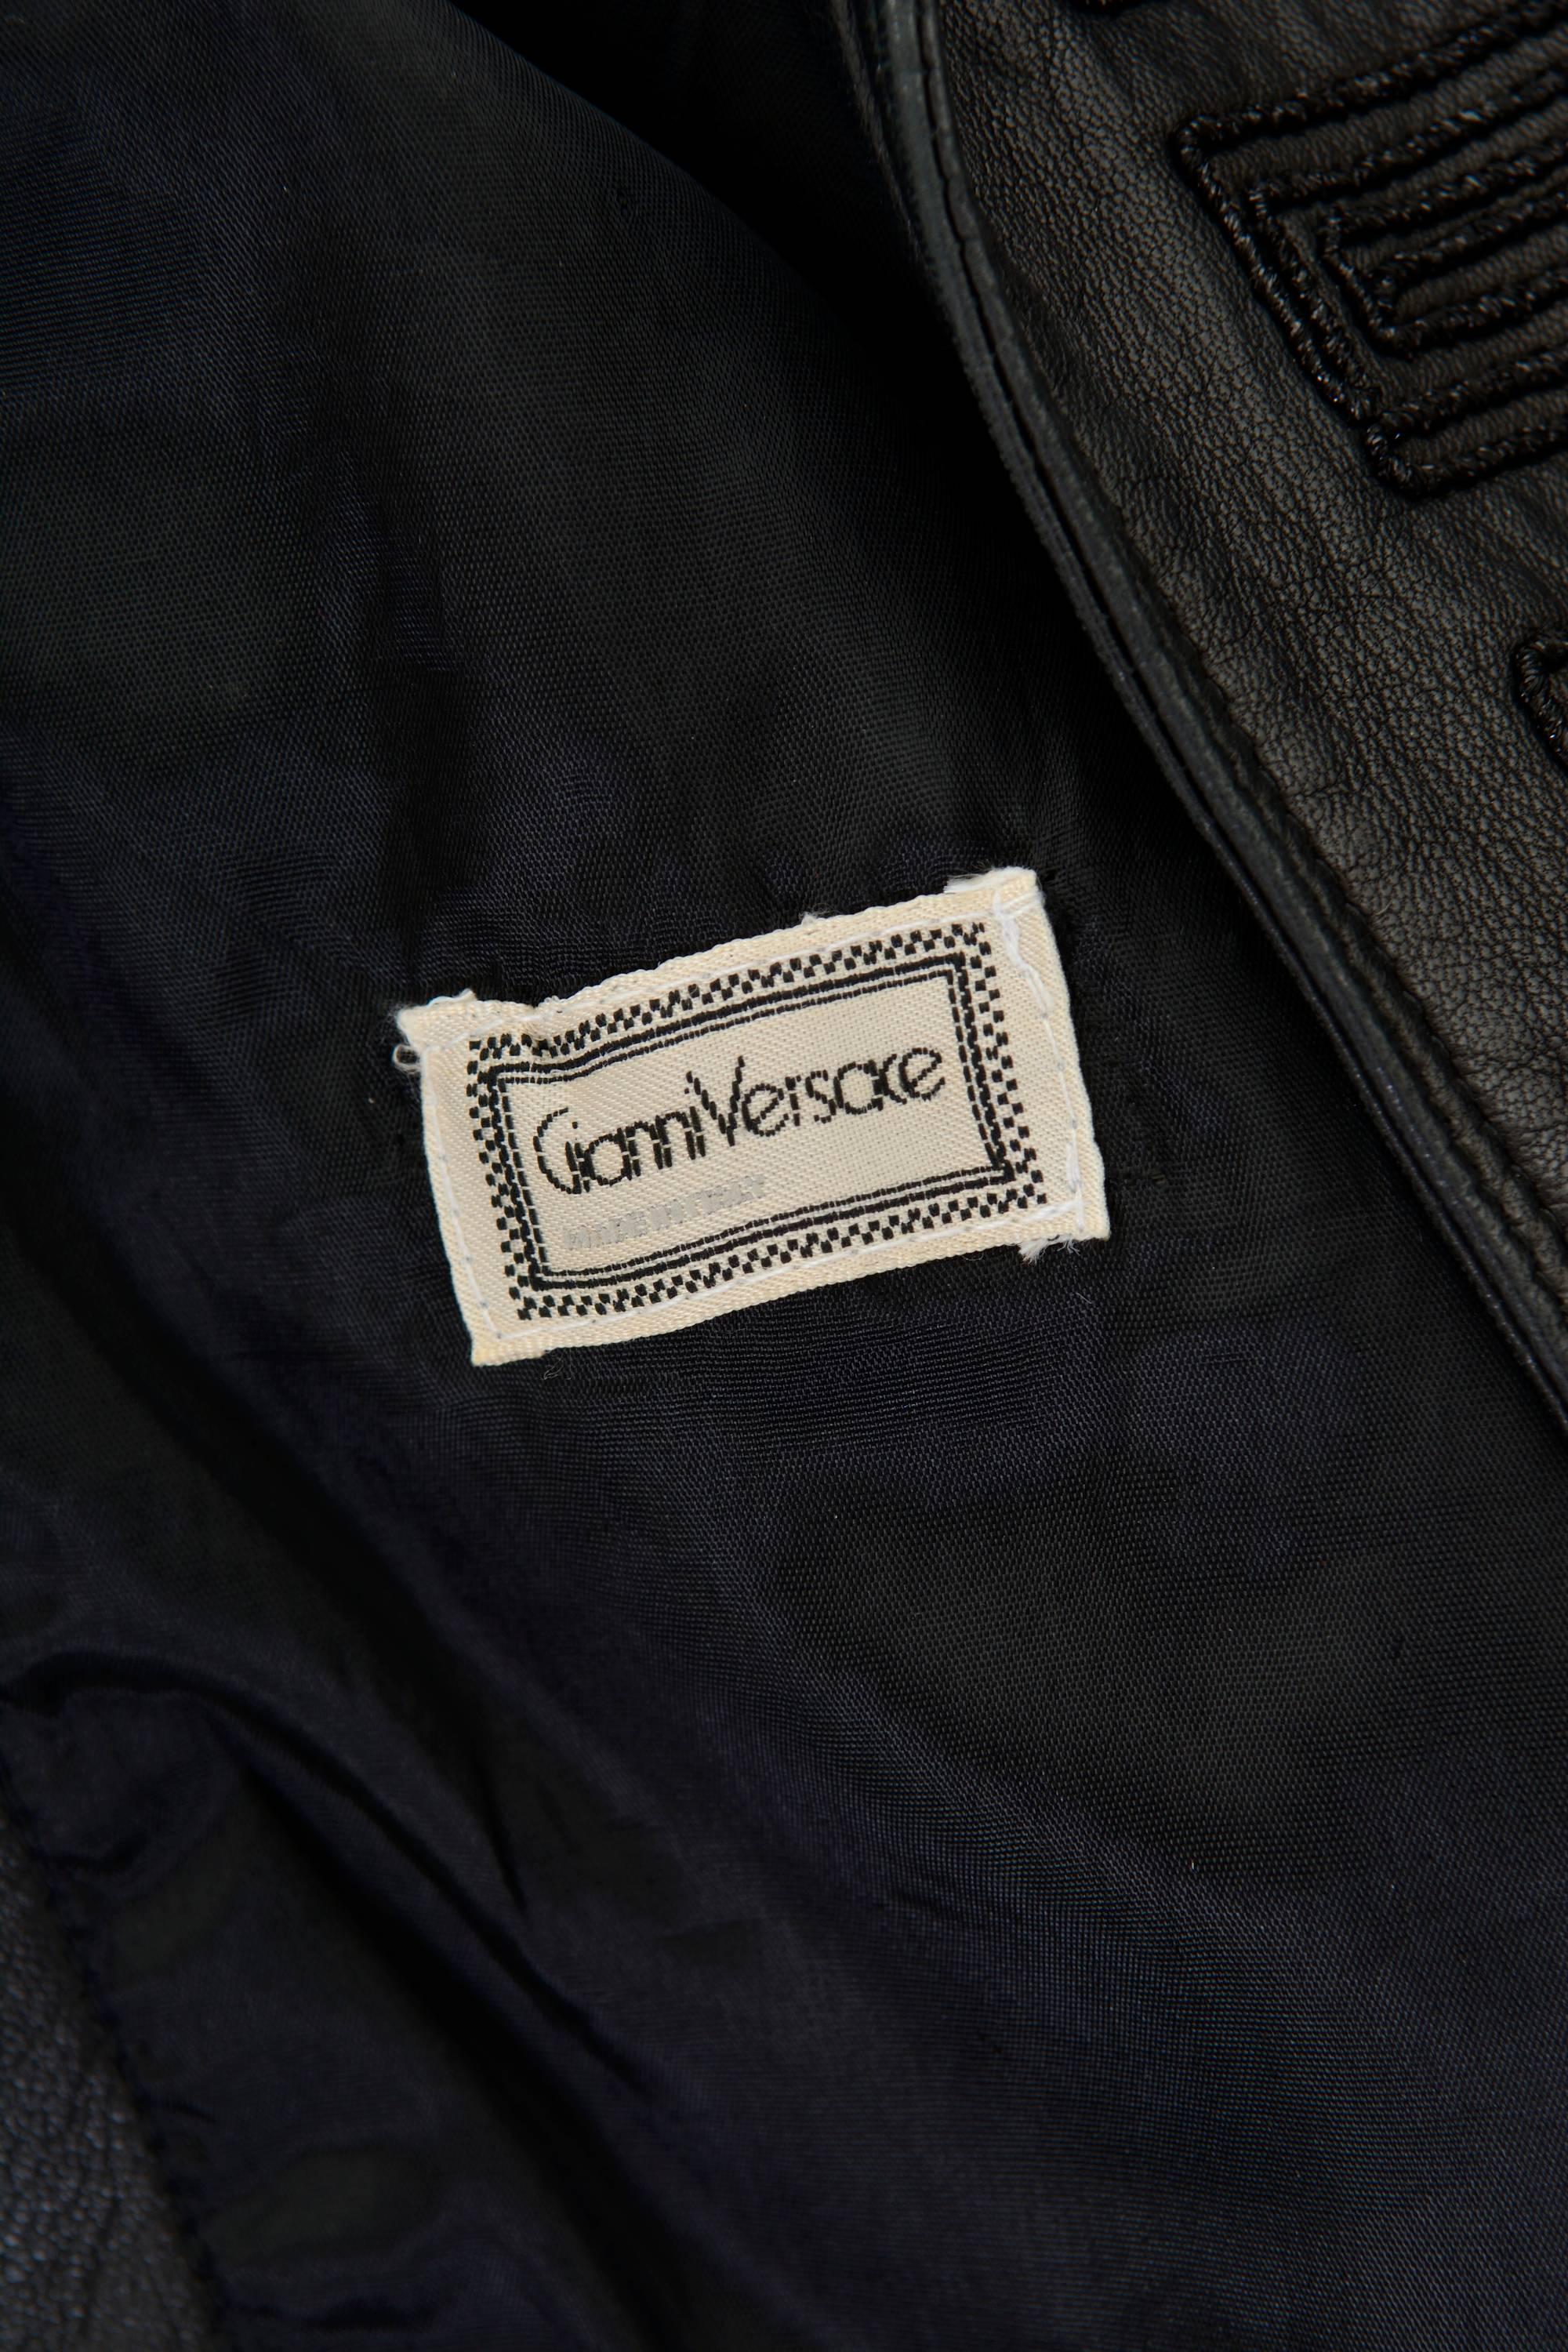 Women's 1980s GIANNI VERSACE Leather Metal Embroidery Bolero Jacket